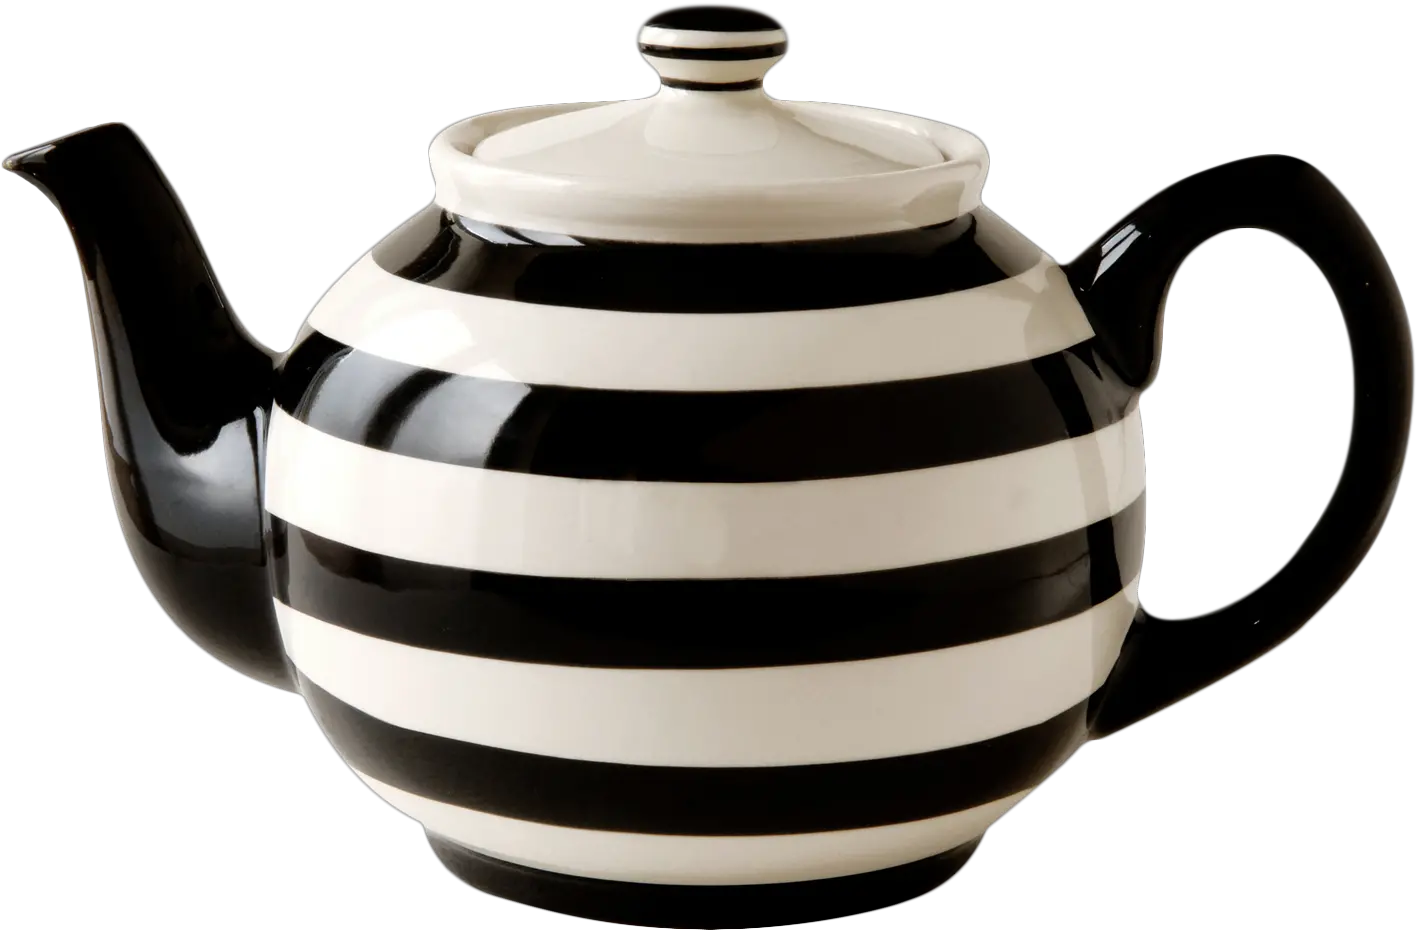 British Teapot Png 2 Image Teapot Stripes Teapot Png